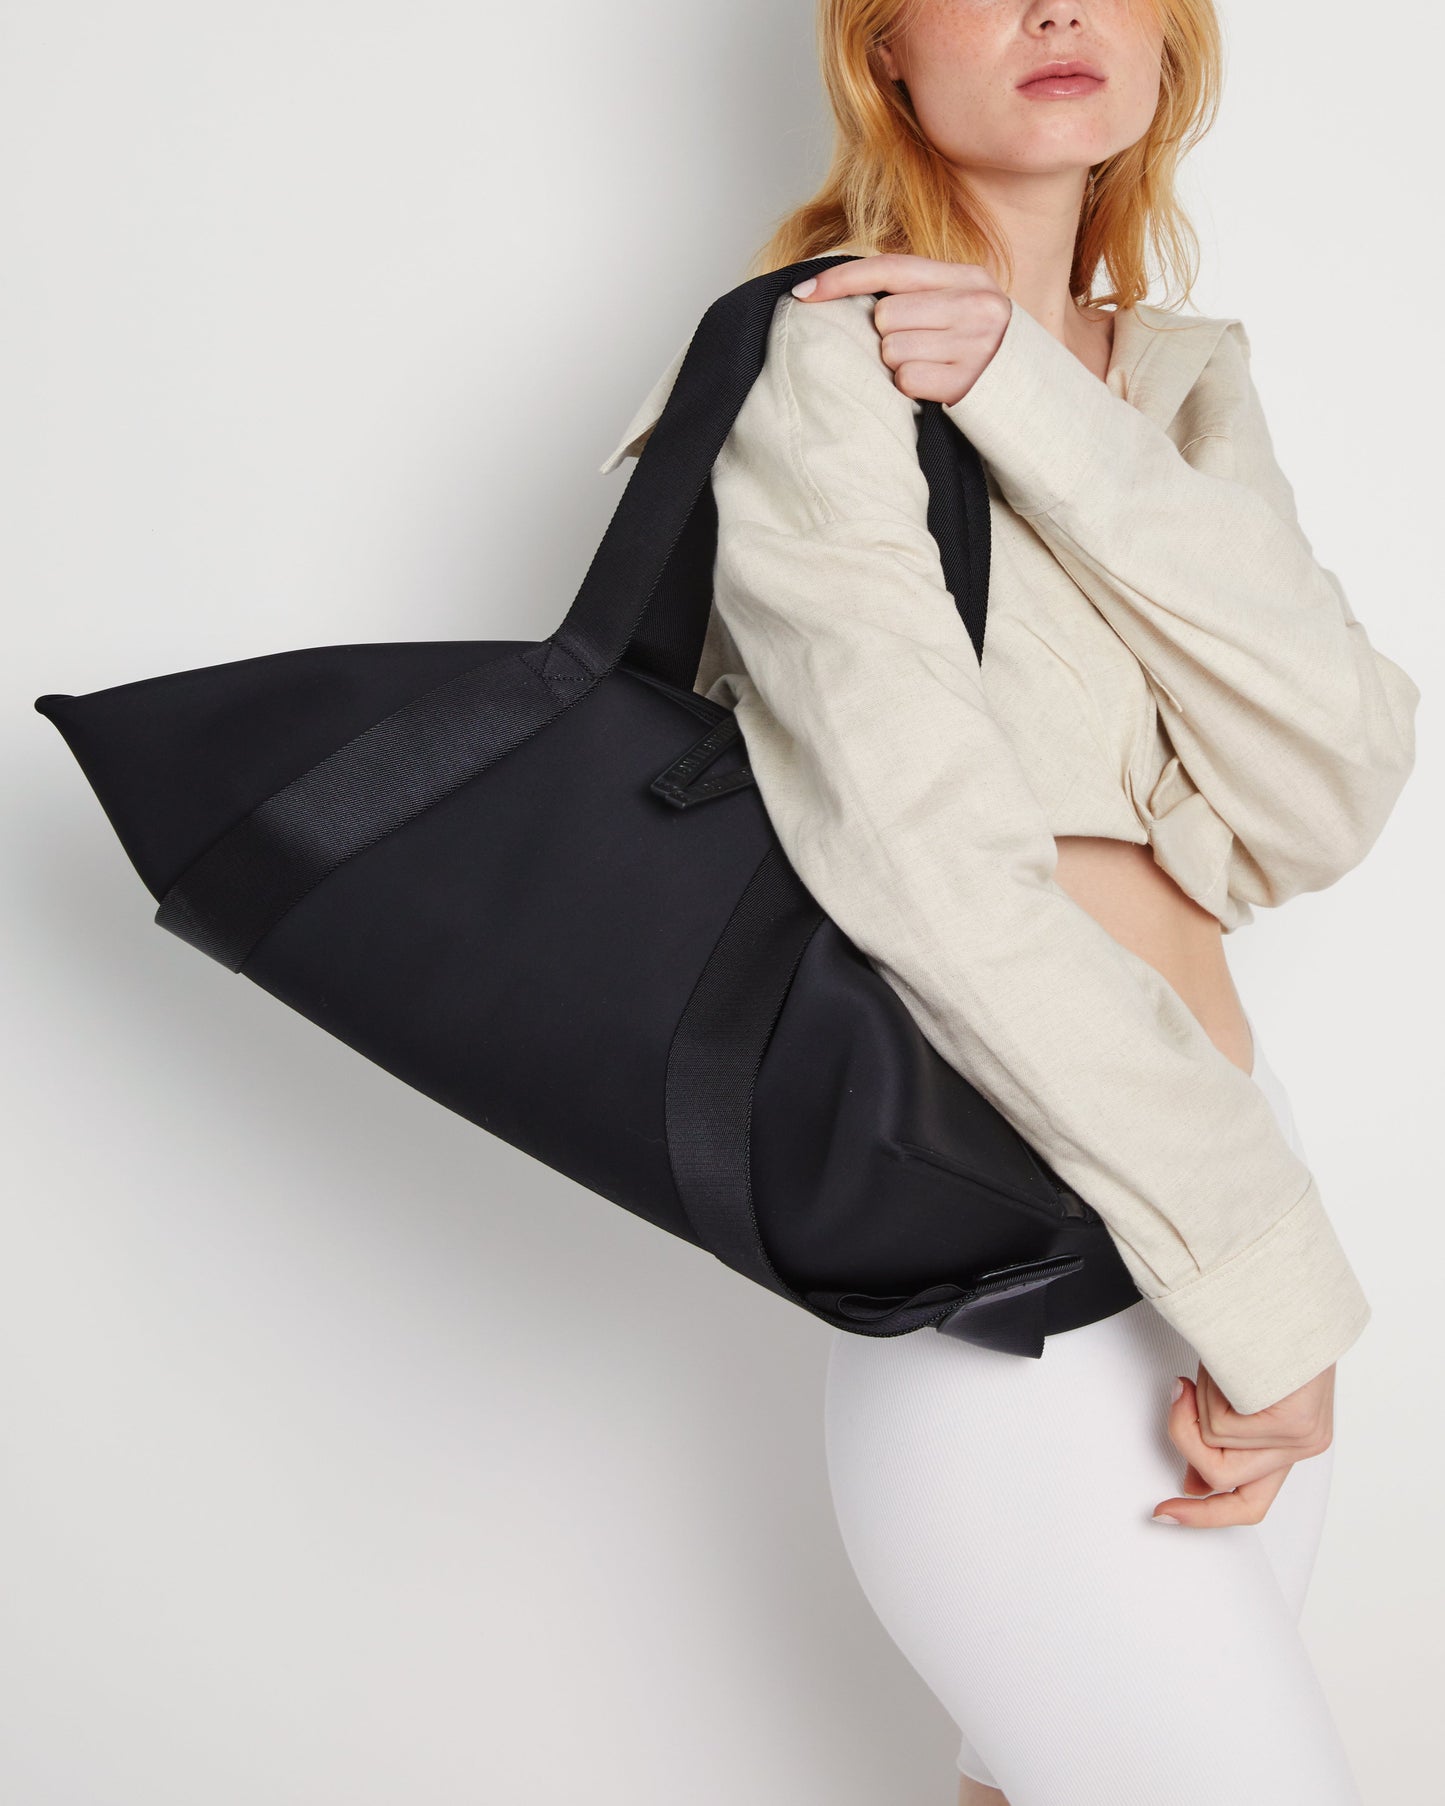 SAMPLE SALE: Yoga Bag - Black Scuba